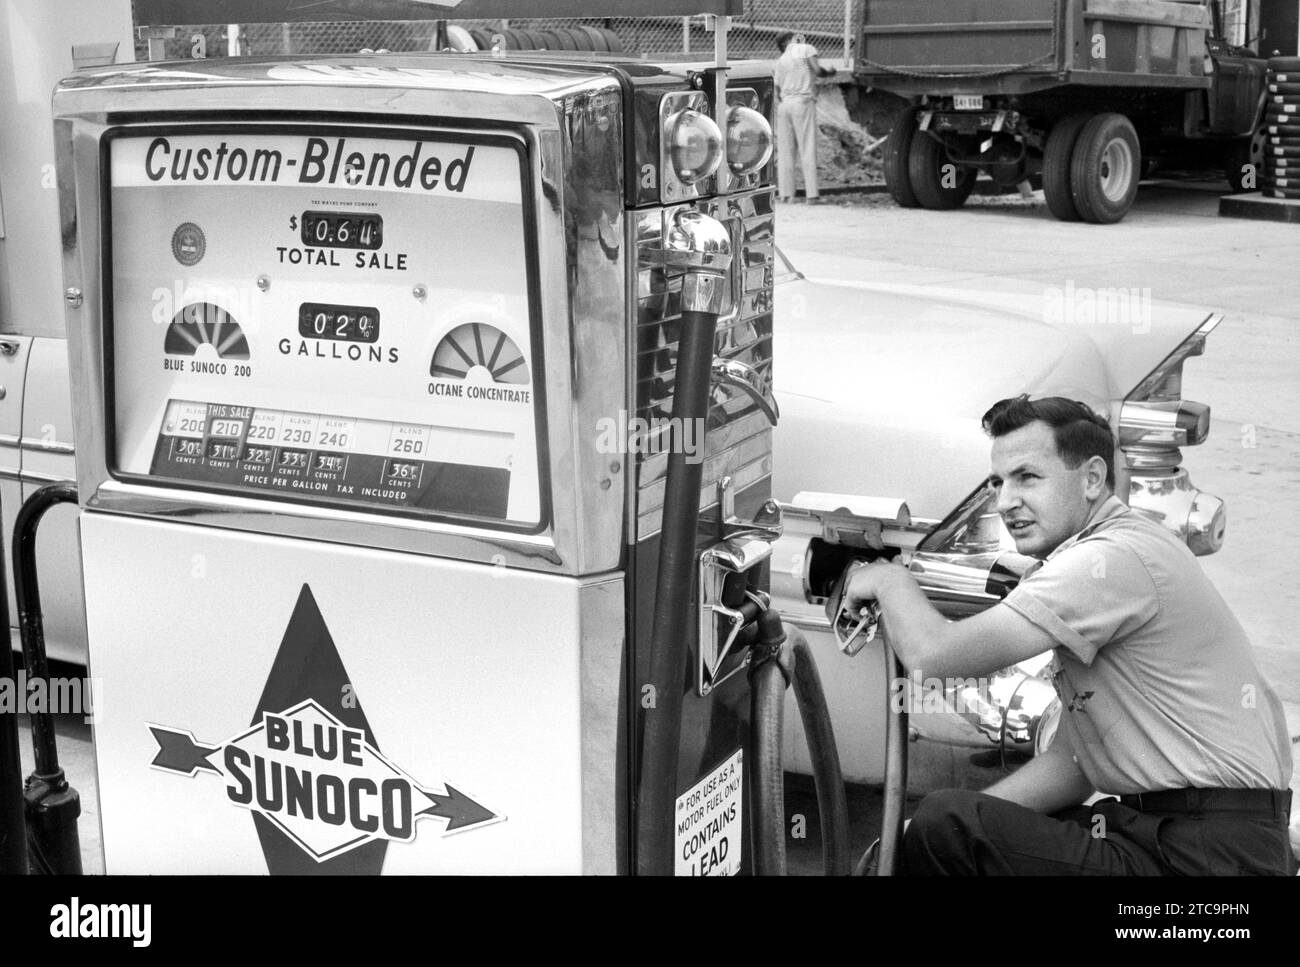 Gas station attendant filling car tank with custom blended gas at Sunoco gas station, Washington, D.C., USA, Thomas J. O'Halloran, U.S. News & World Report Magazine Photograph Collection, June 5, 1958 Stock Photo